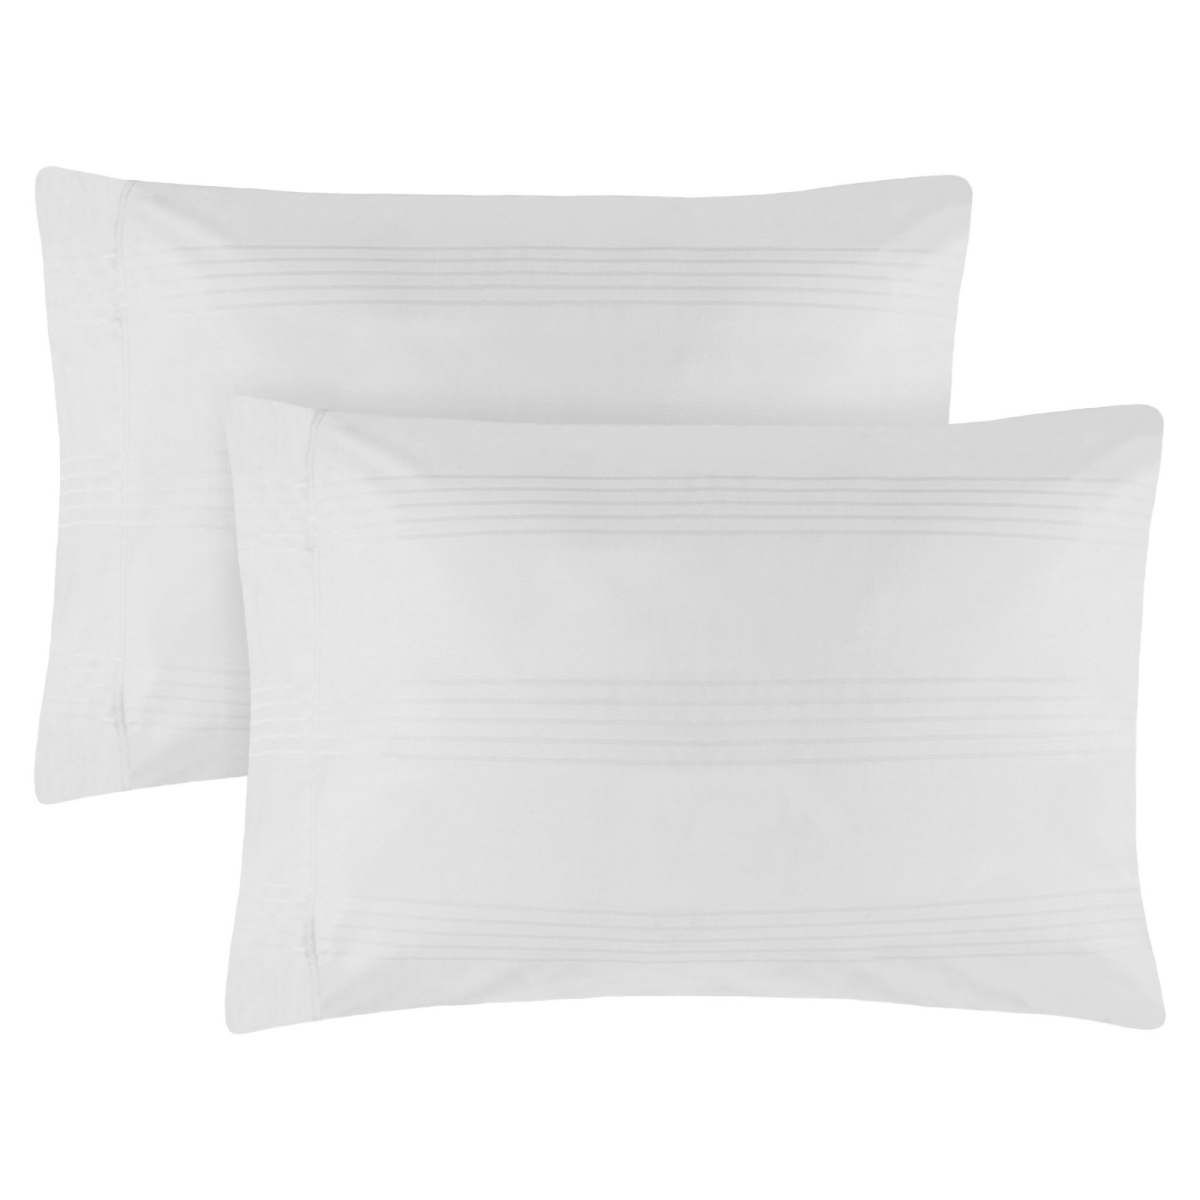 Yms008214 Premium 420 Thread Count 100 Percent Cotton Pillowcase Set, White - King - 2 Piece